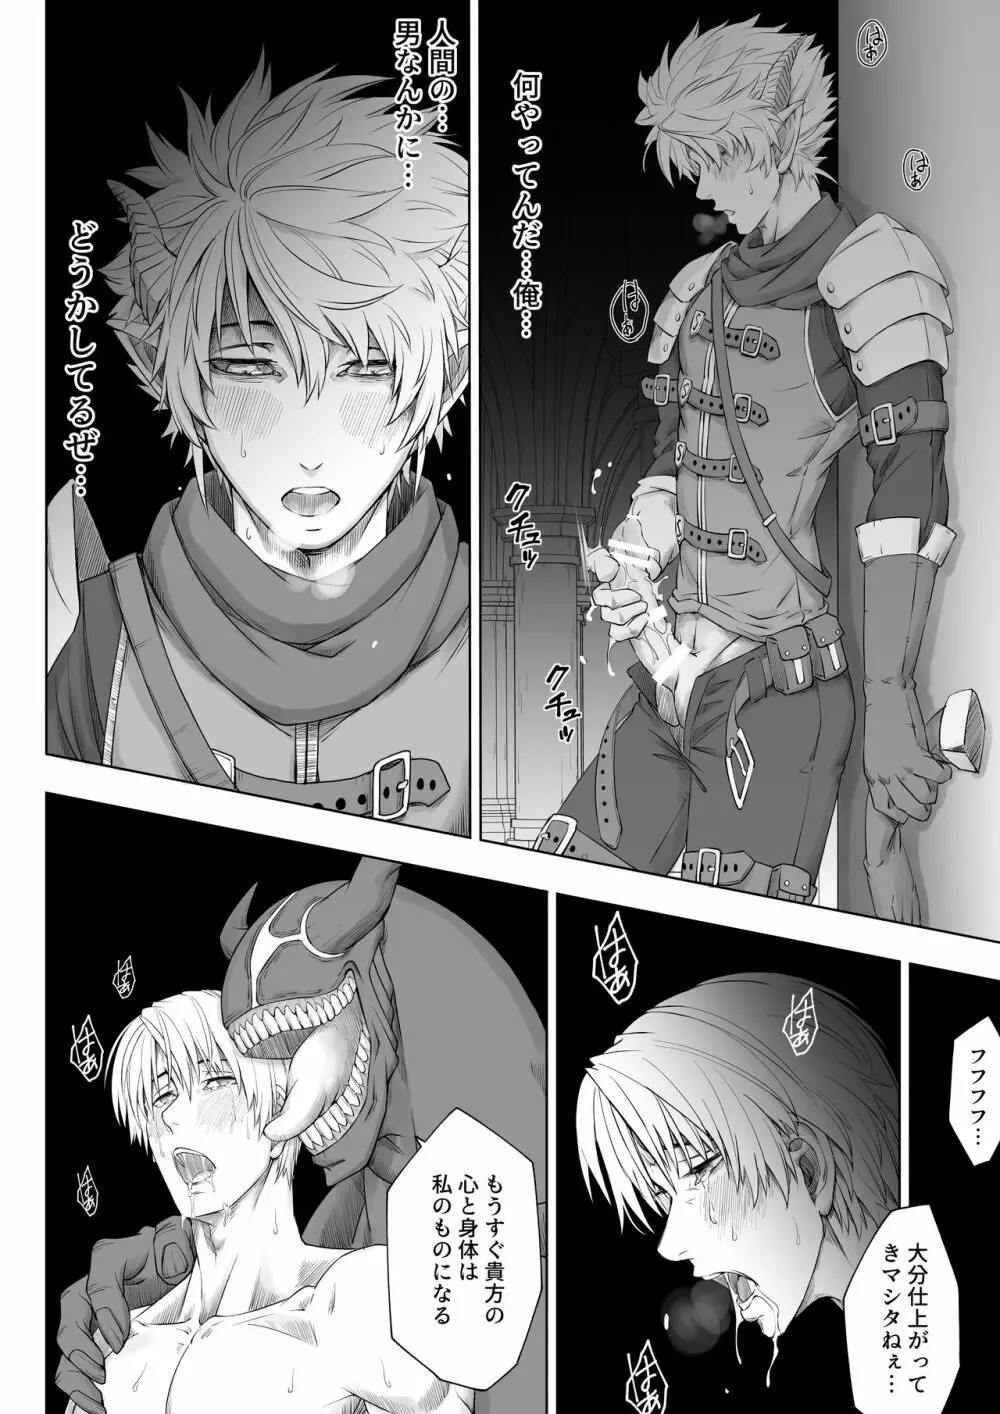 Knight of Labyrinth / ナイト オブ ラビリンス - page34